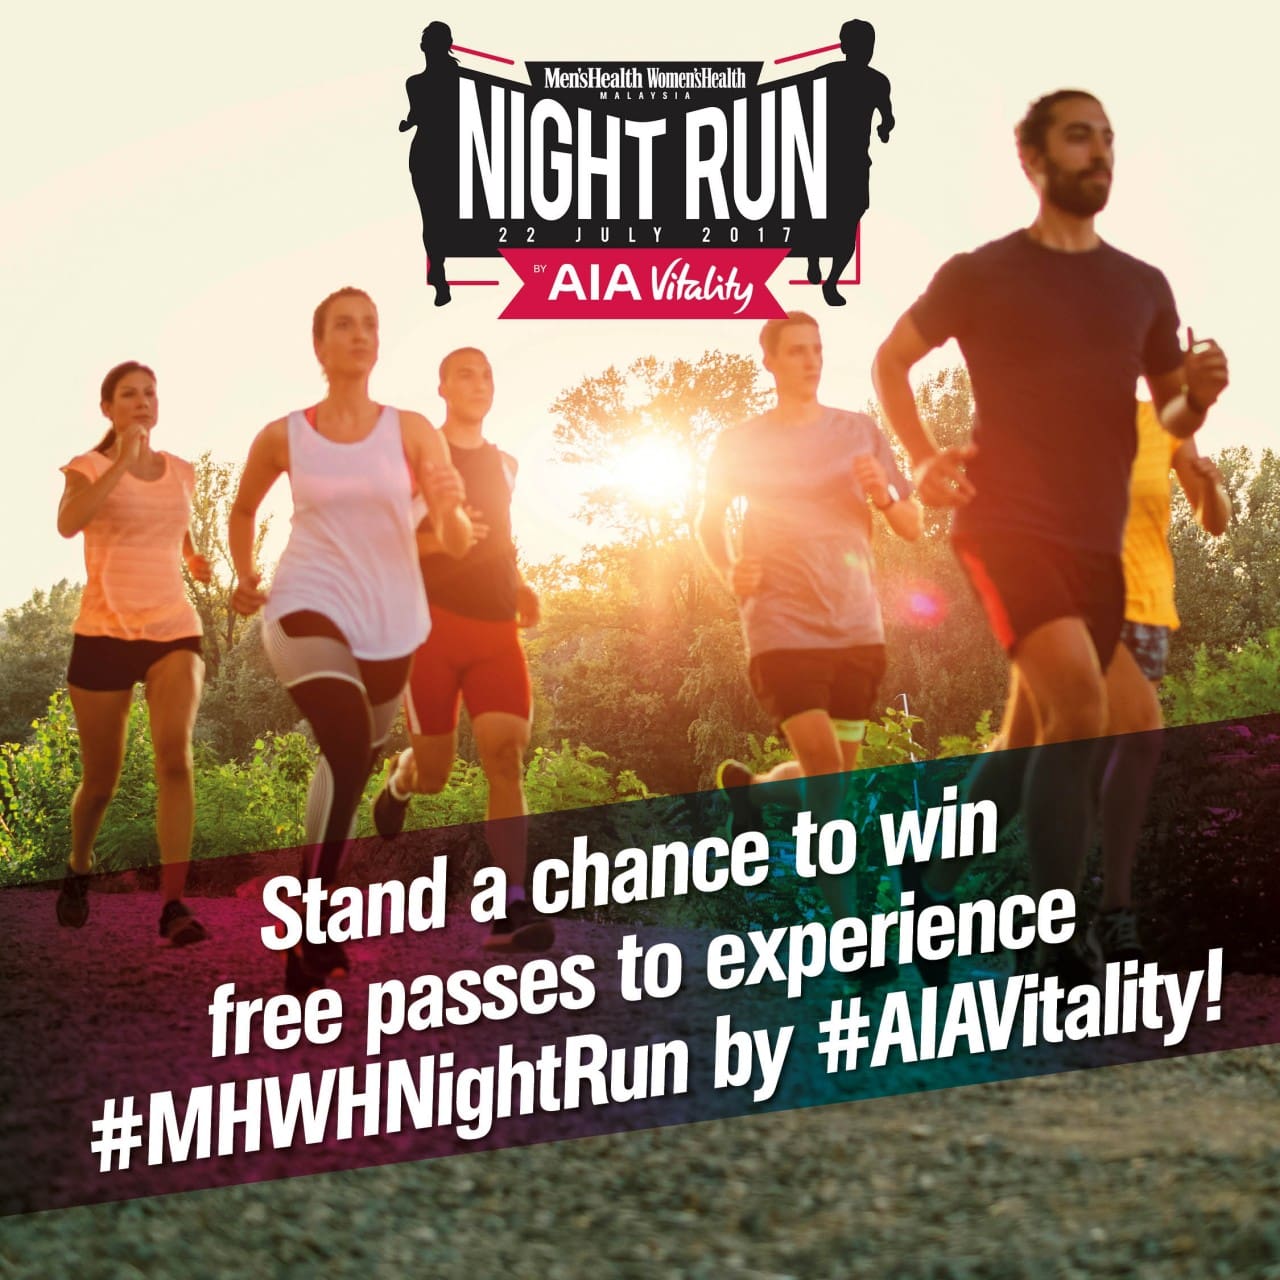 MHWH Night Run contest